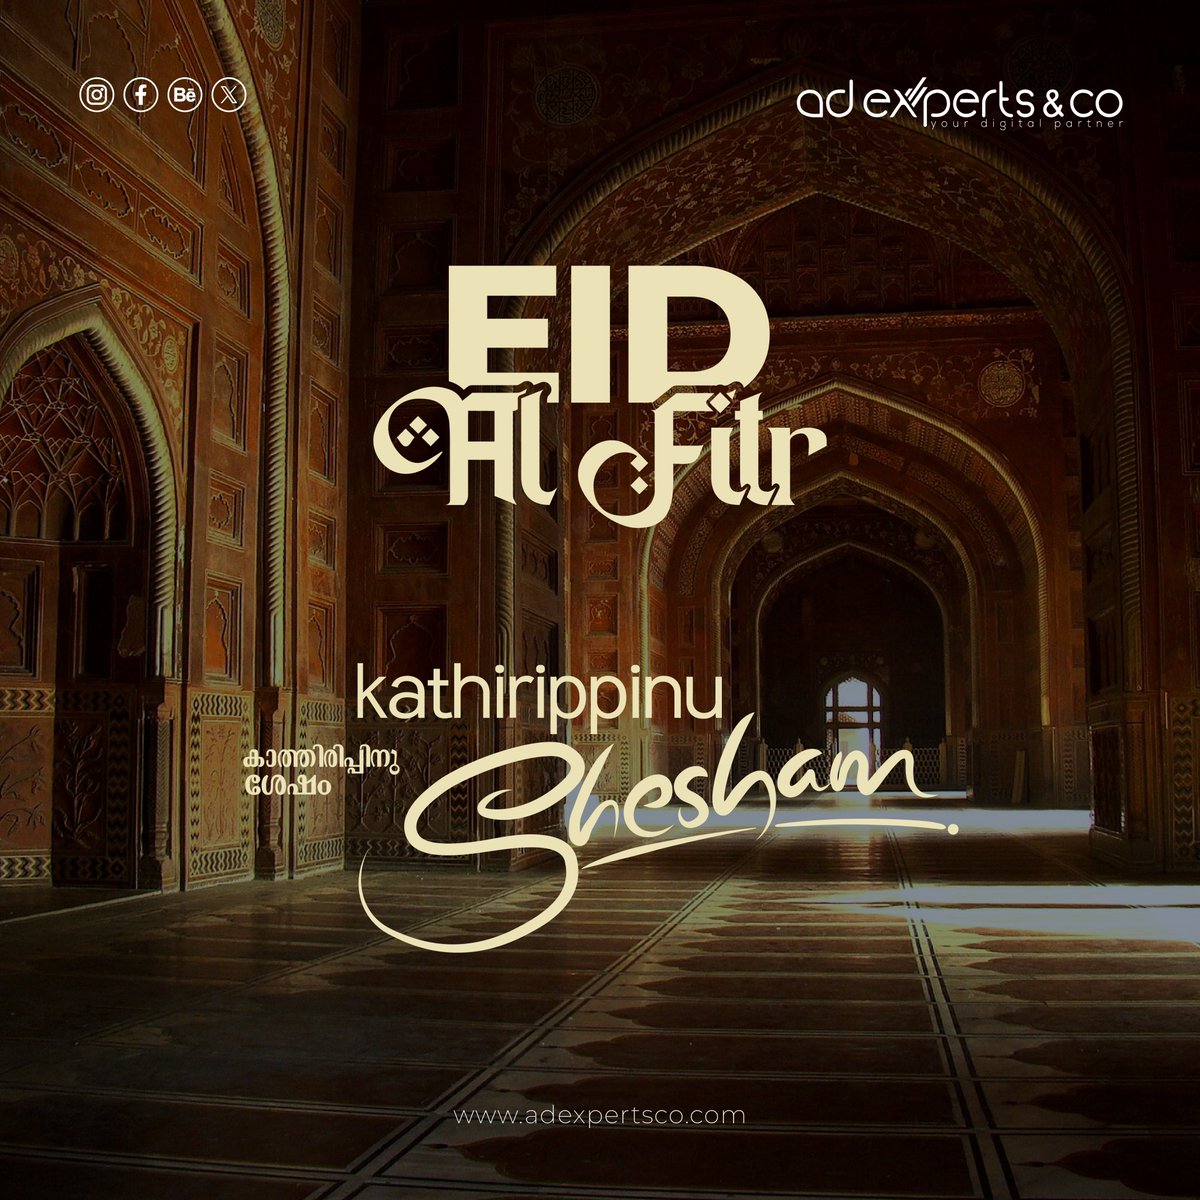 Eid Mubarak 🌙
.
.
.
#eidmubarak #varshagalkkushesham #kathirippinushehsam #eid #adexpertsco